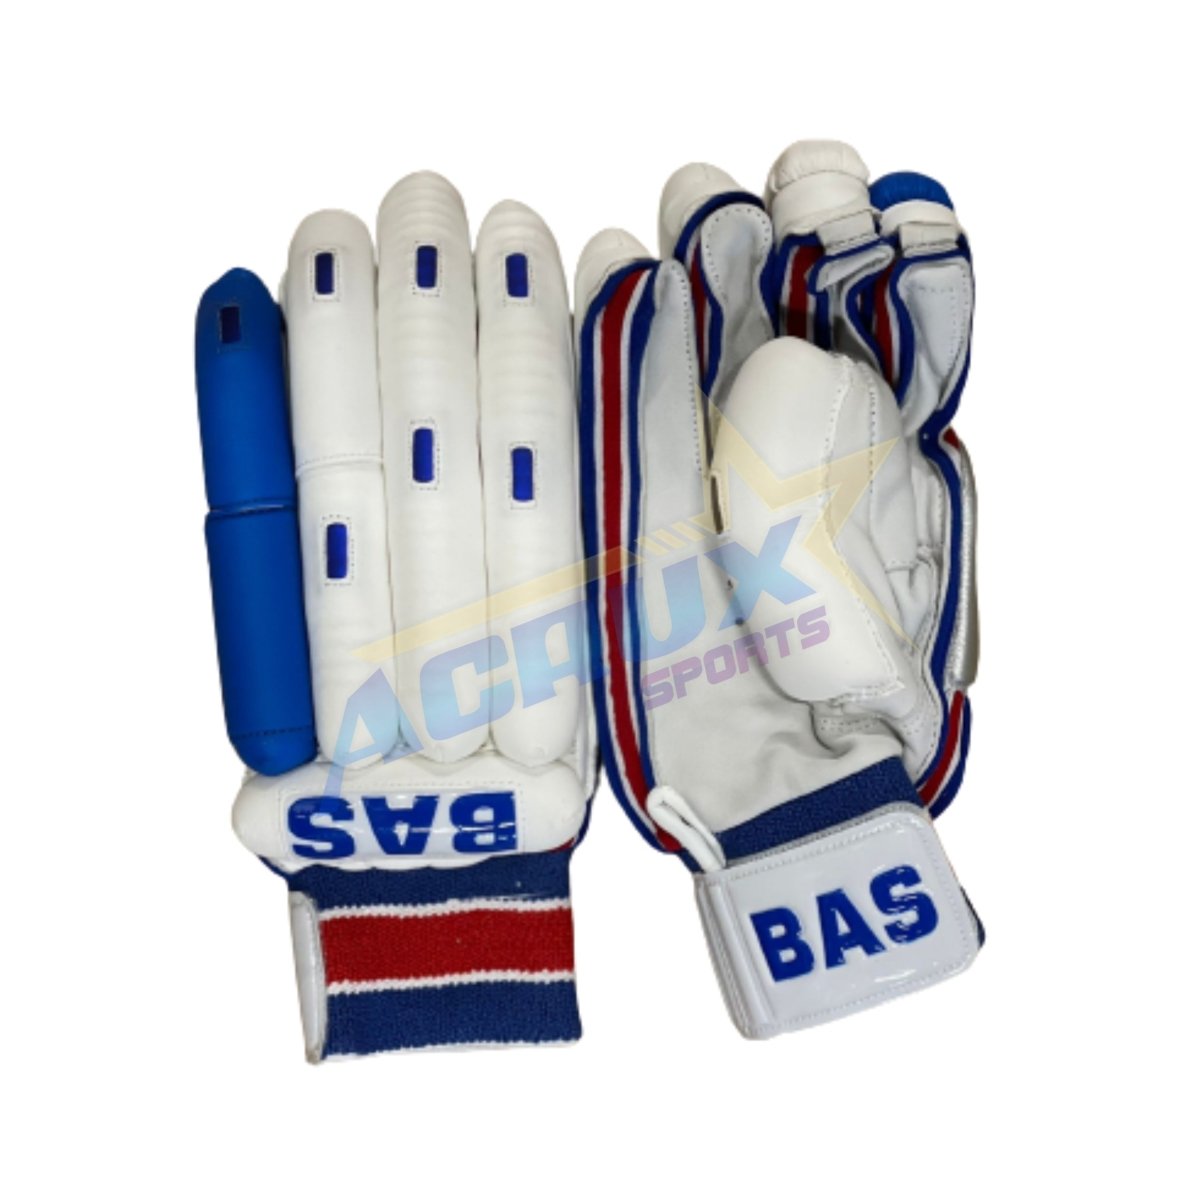 BAS Pro Players Cricket Batting Gloves.